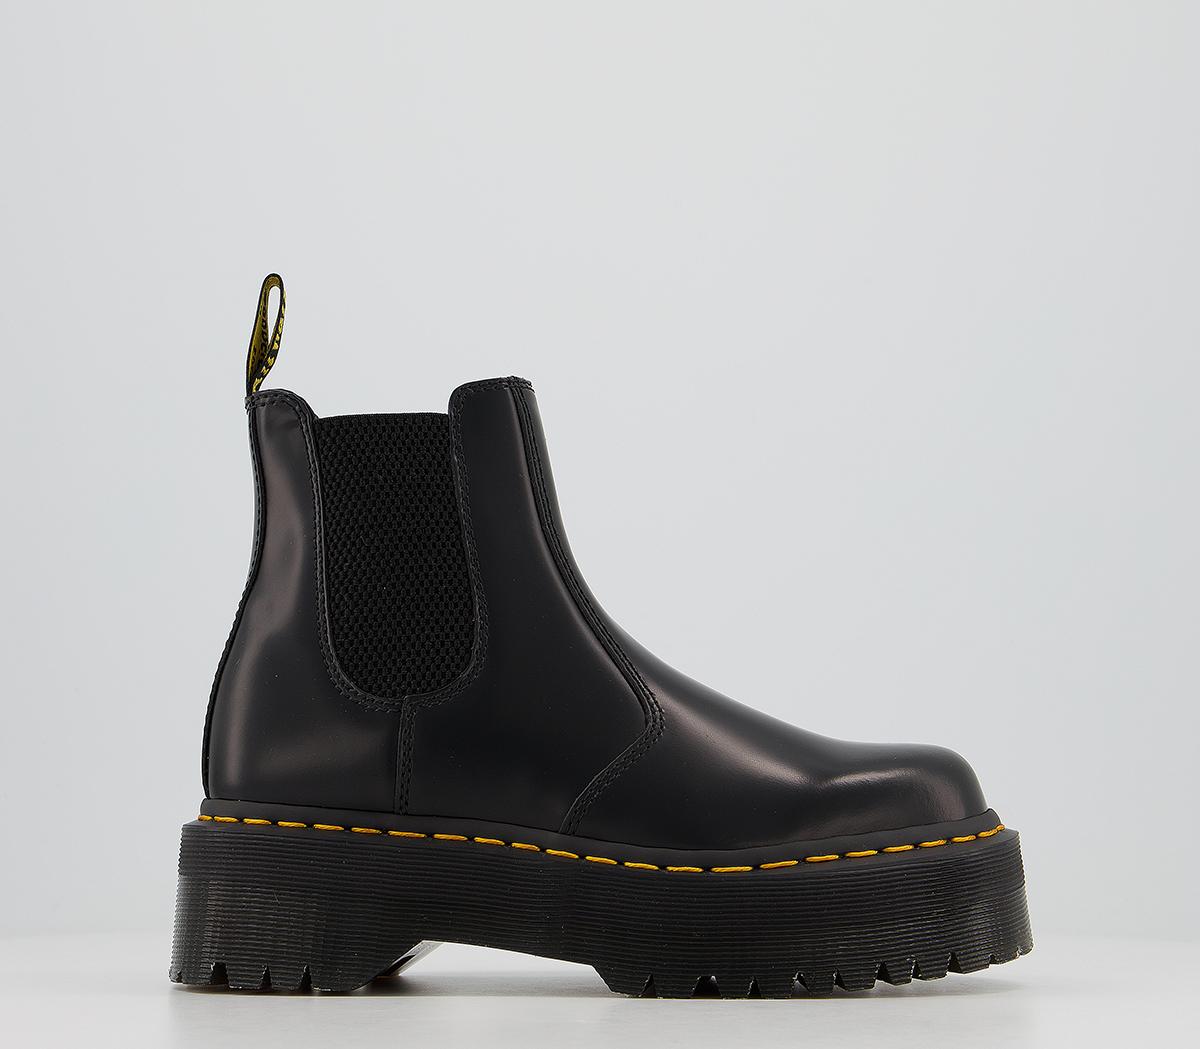 Dr. Martens 2976 Quad Chelsea Boots Black Leather - Women's Ankle Boots